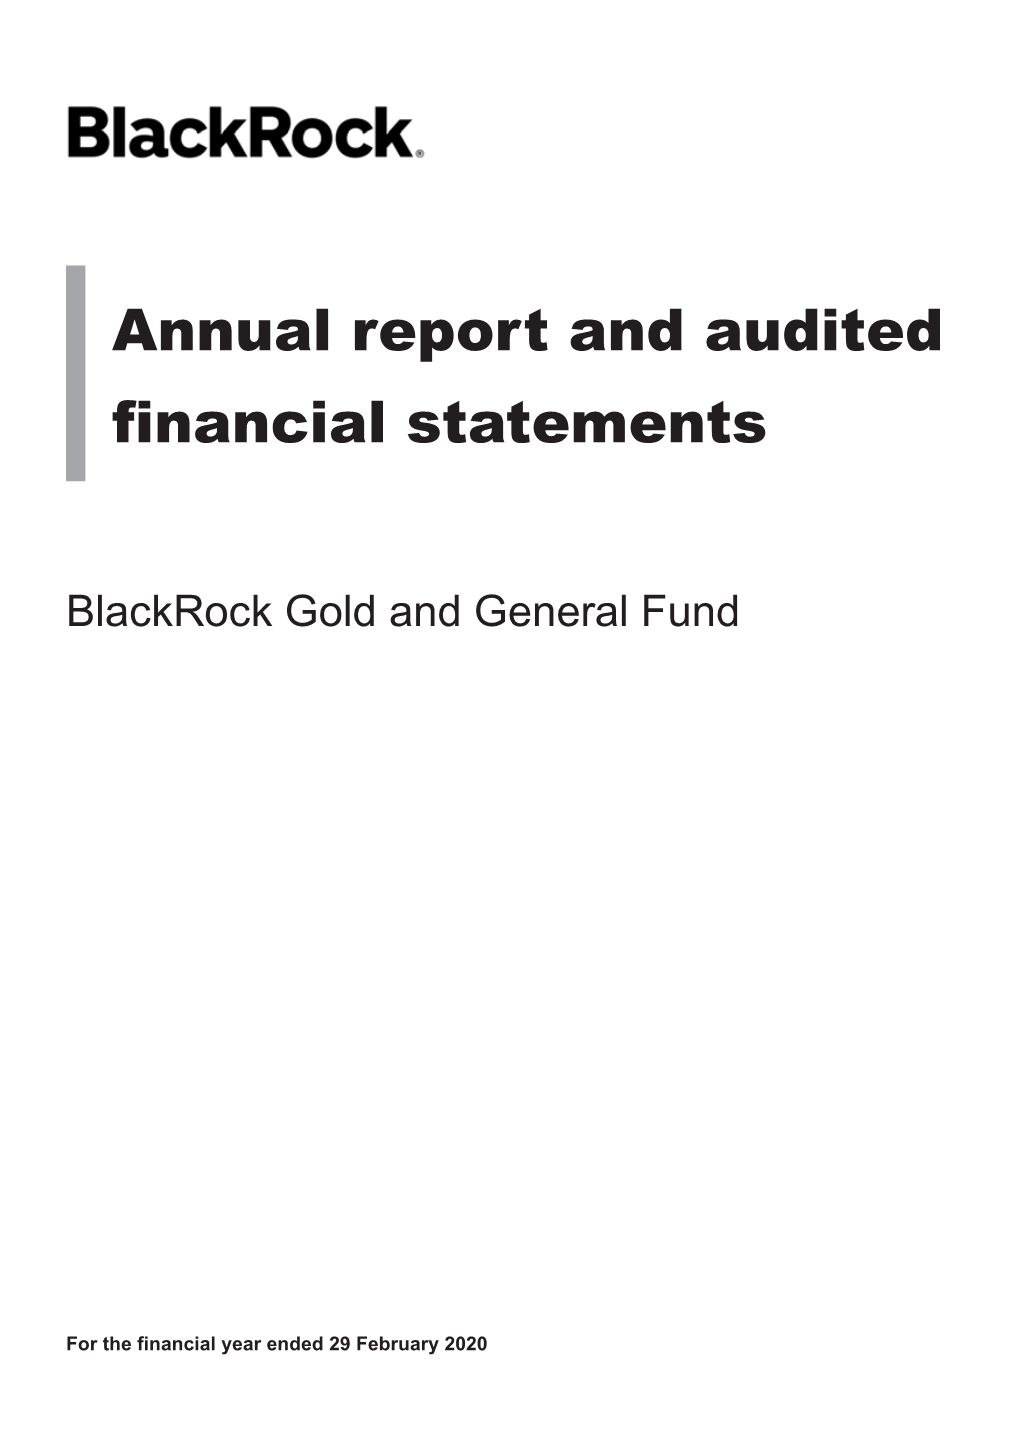 Blackrock Gold and General Fund